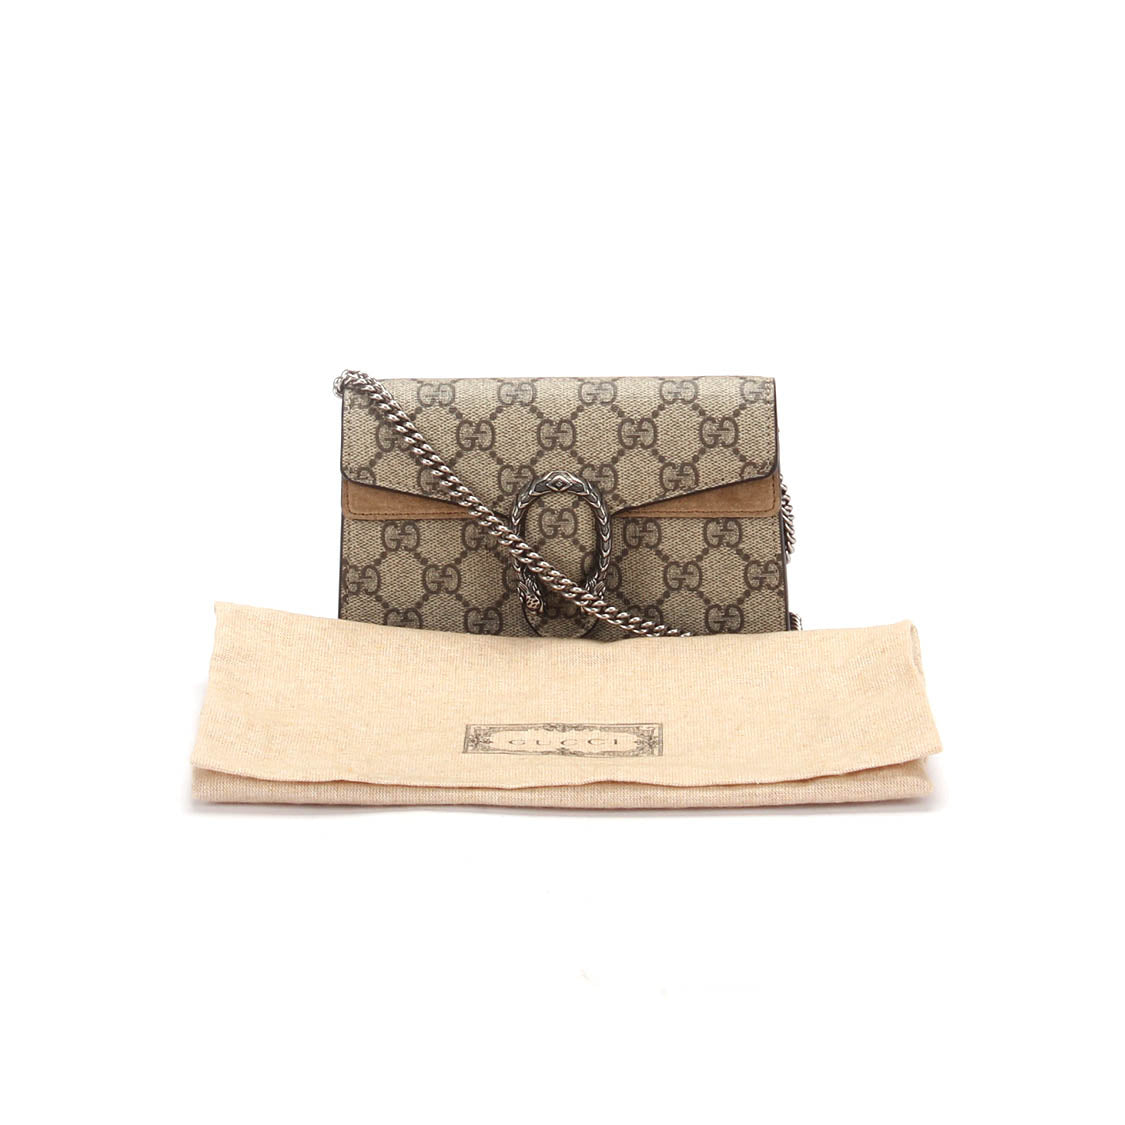 Gucci Dionysus Super Mini GG Supreme Canvas Crossbody Bag Taupe 476432